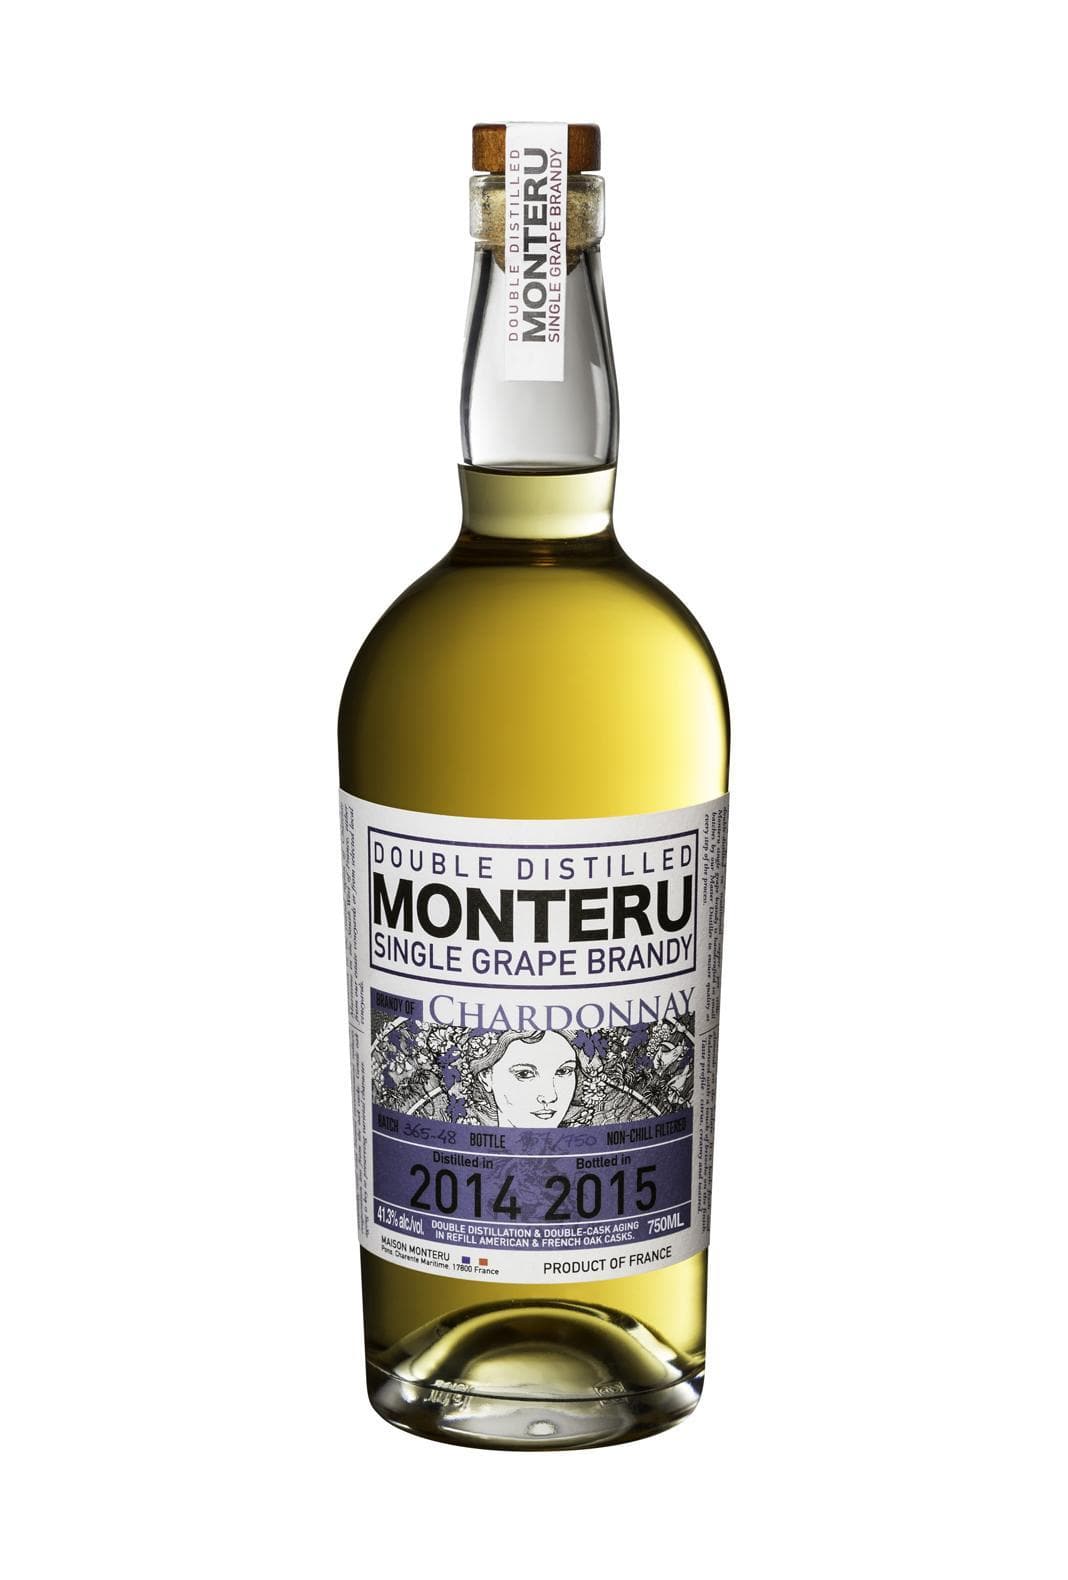 Naud Brandy Monteru Chardonnay 41.3% 700ml | Liquor & Spirits | Shop online at Spirits of France